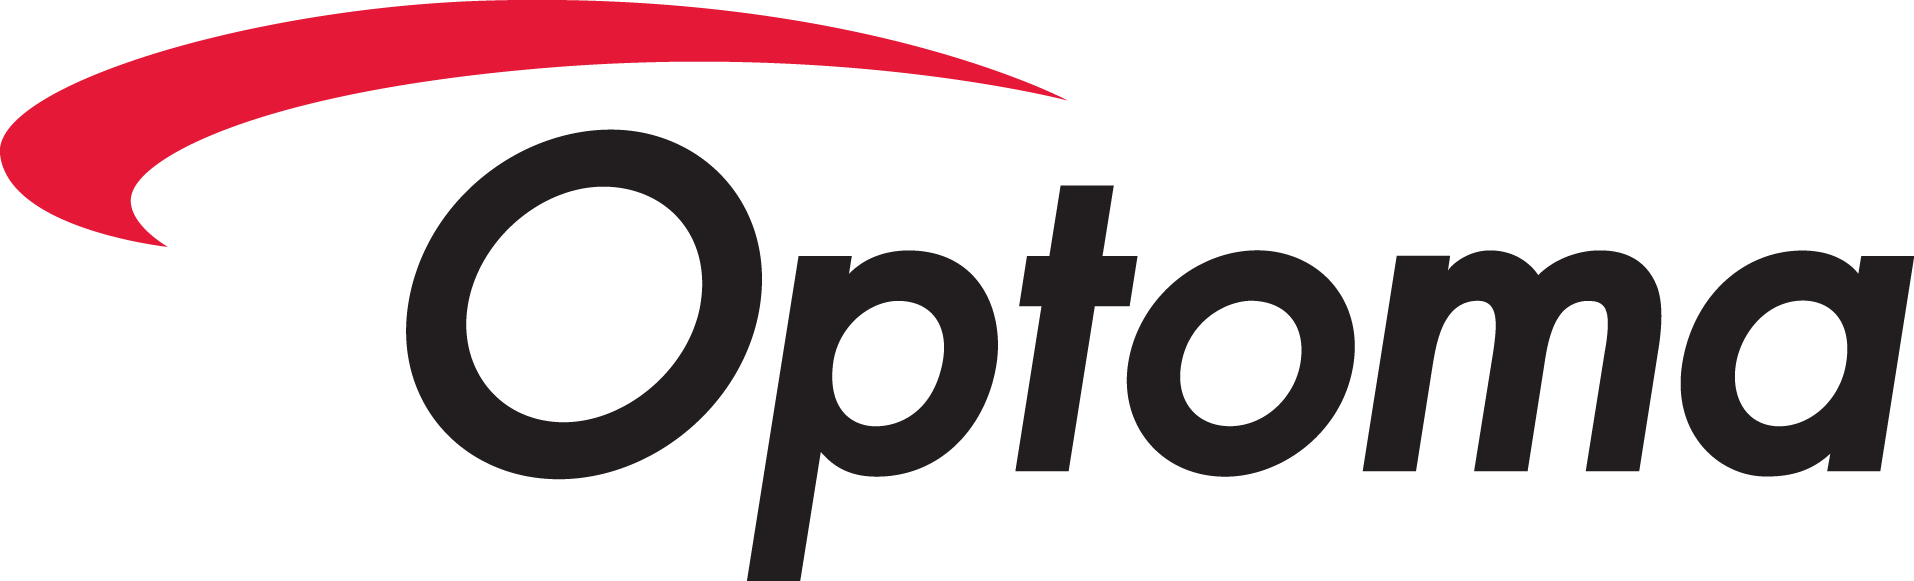 Optoma Projectors